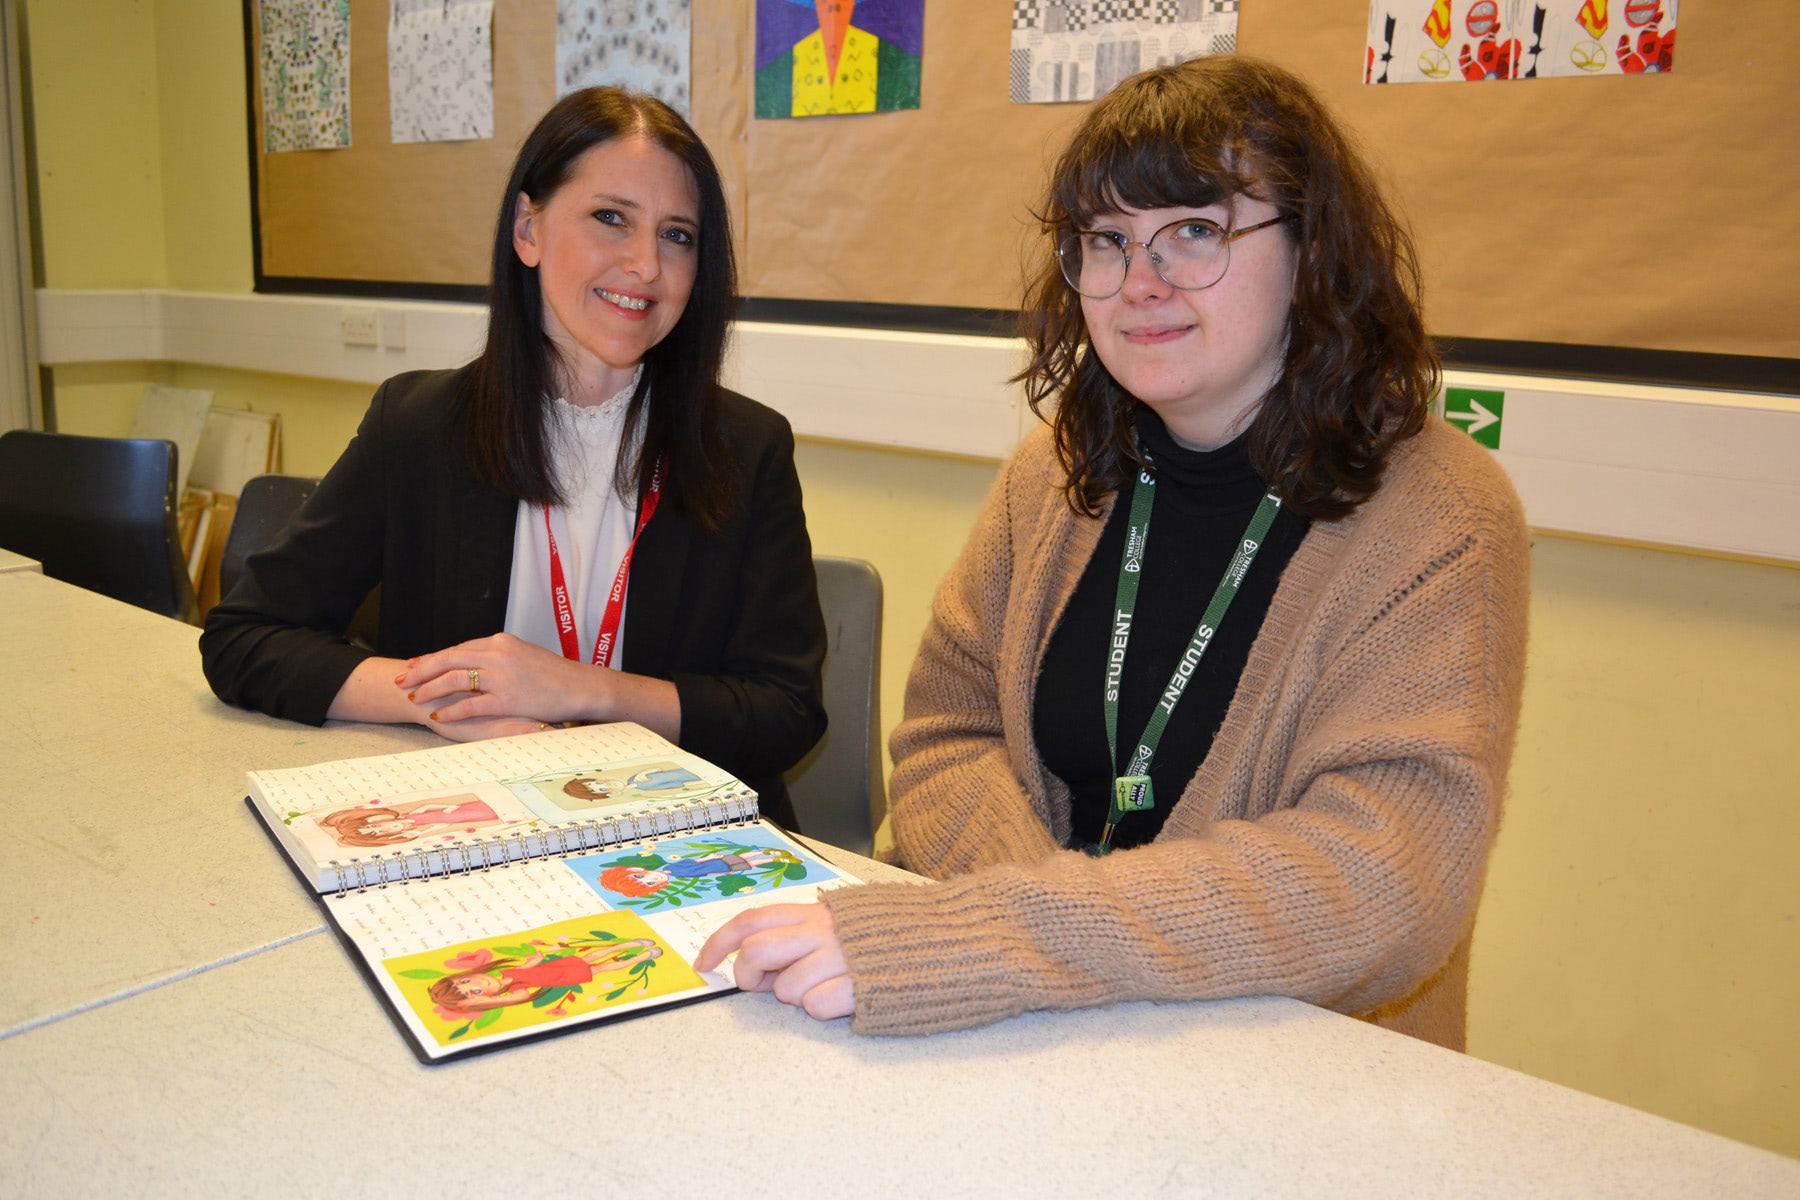 Author Sarah Walsh (left) with student Gemma Tetley